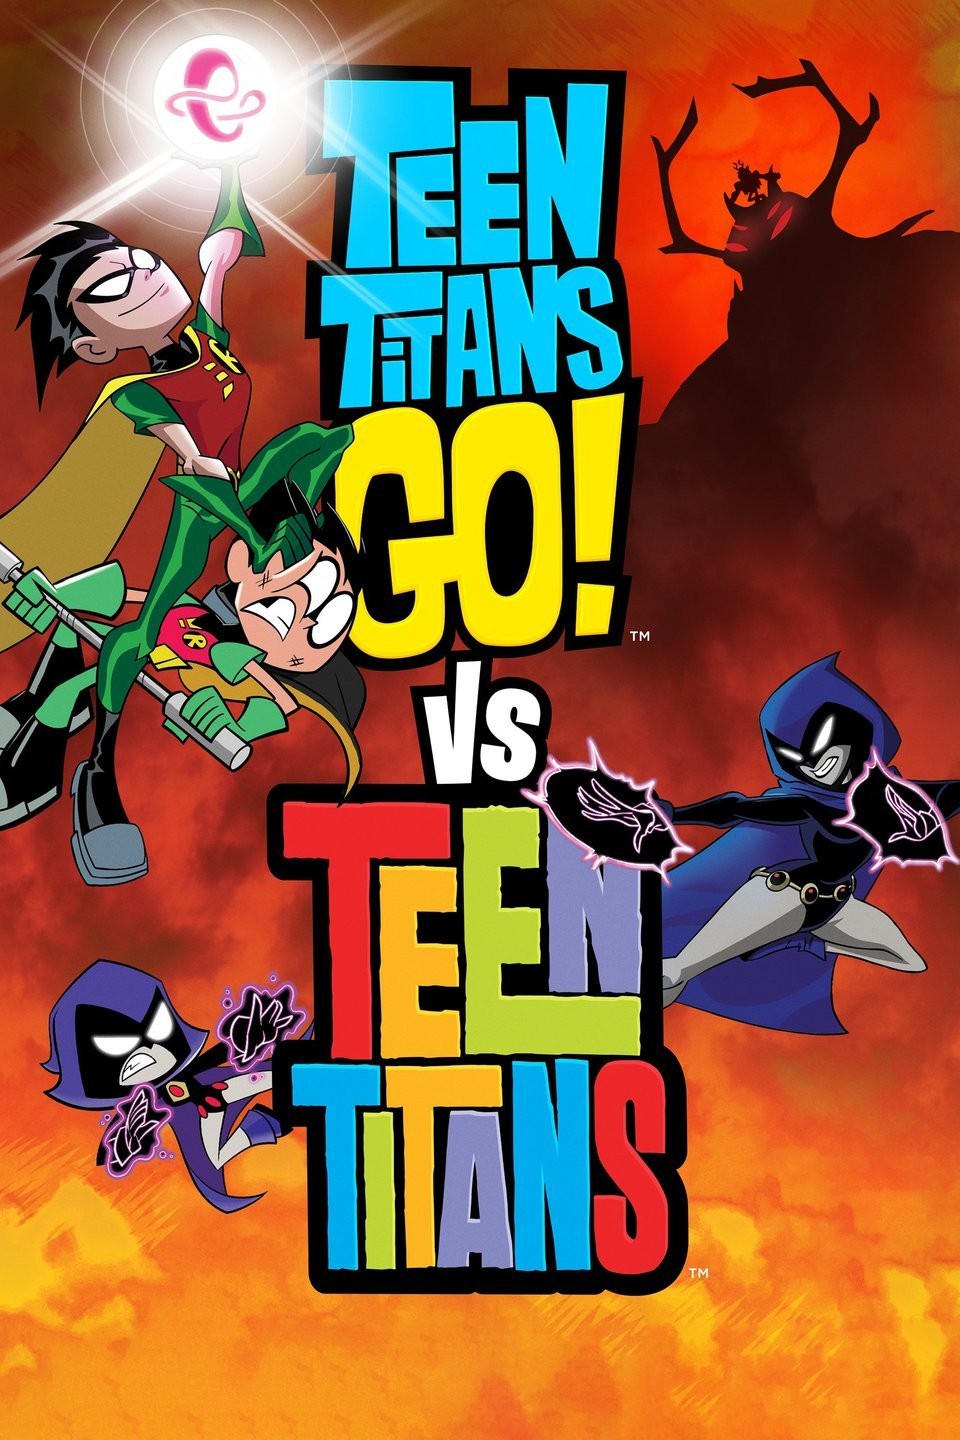 Titans Série - onde assistir grátis